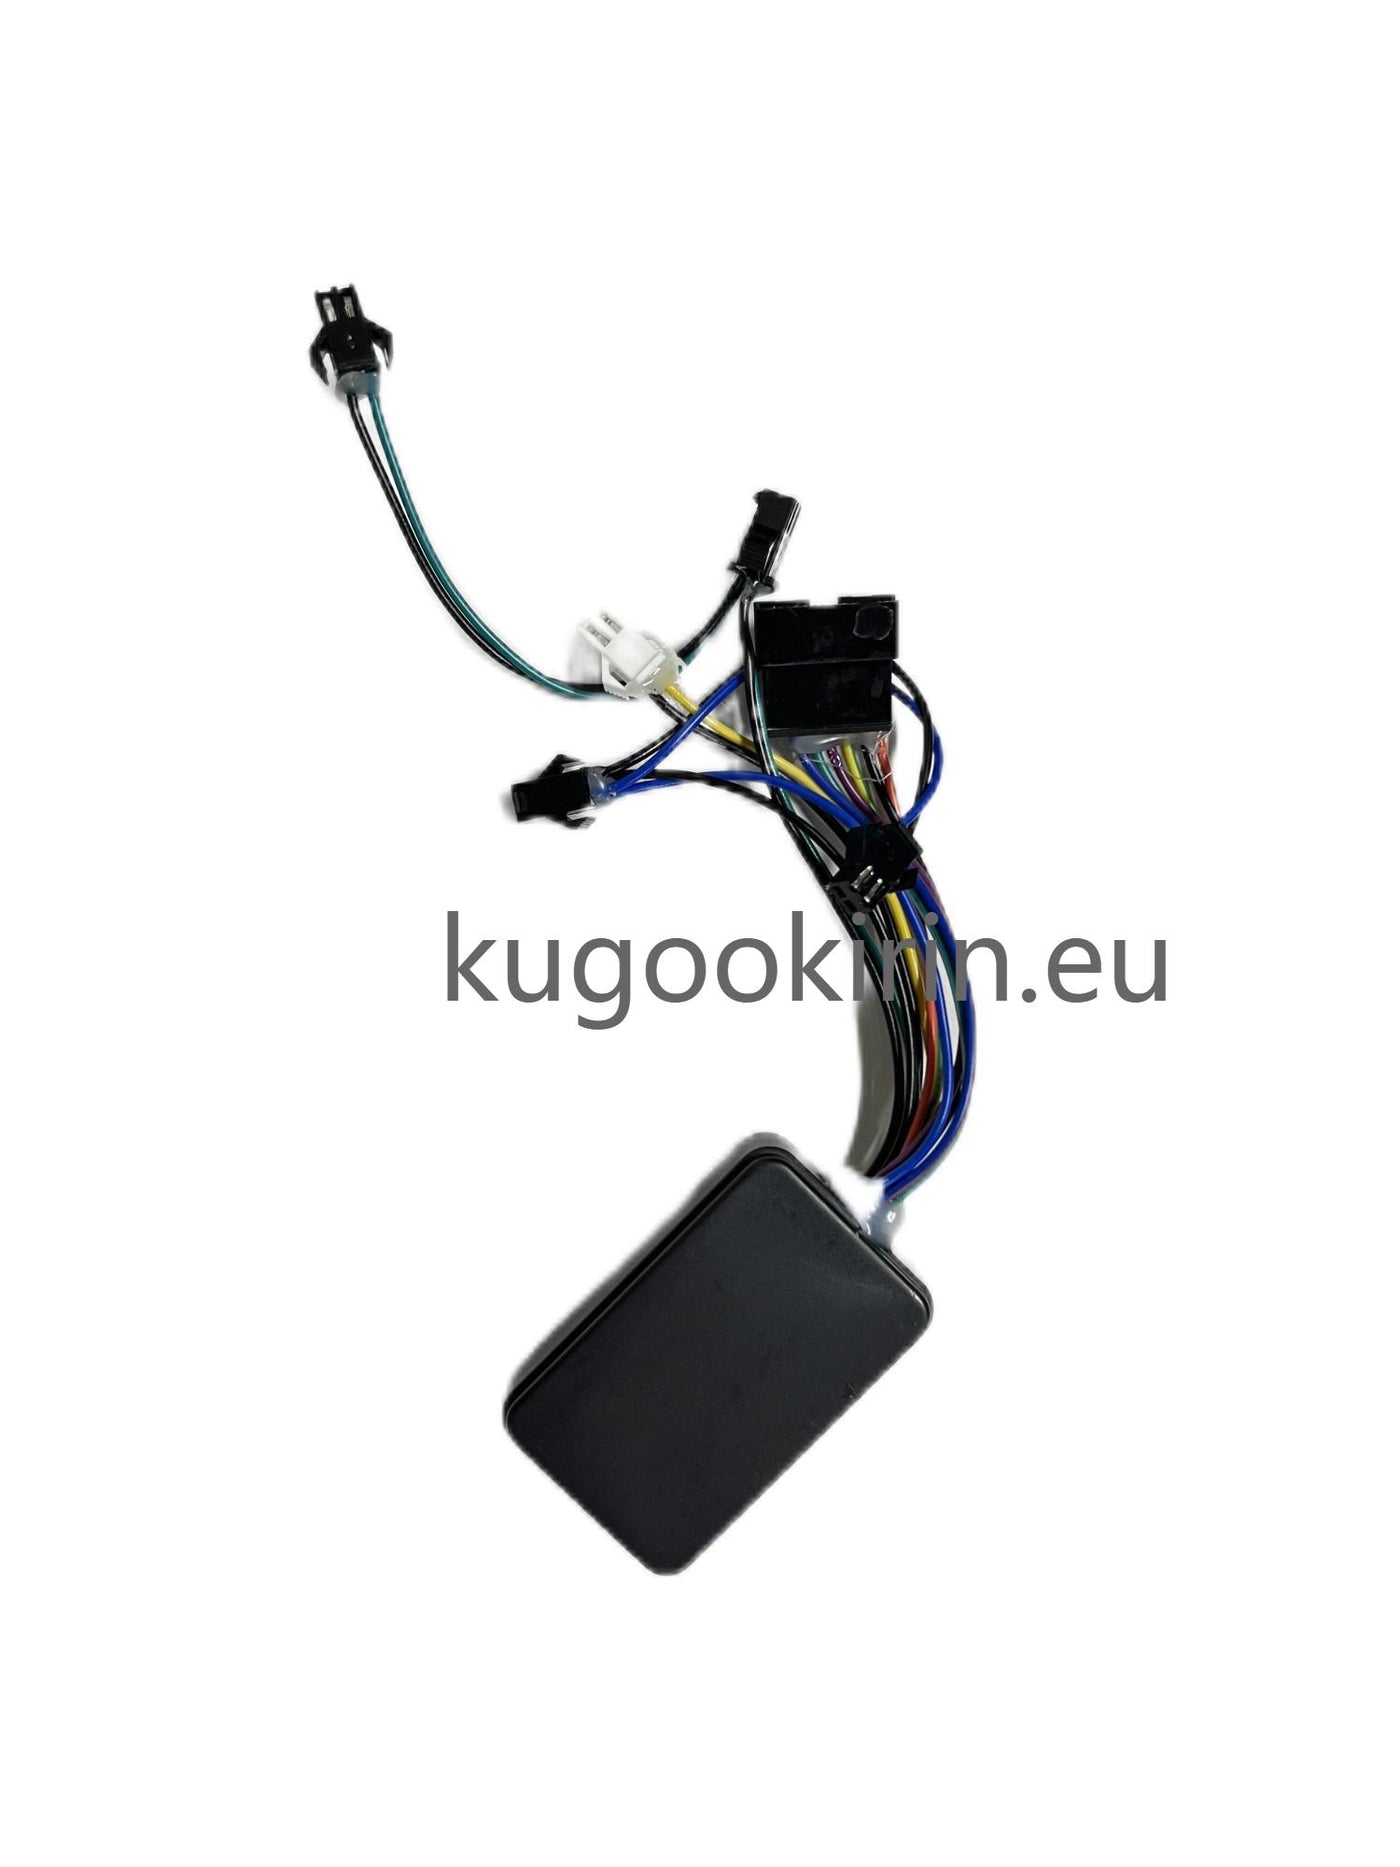 Headlight Module per Kugoo Kirin KuKirin G2 Max